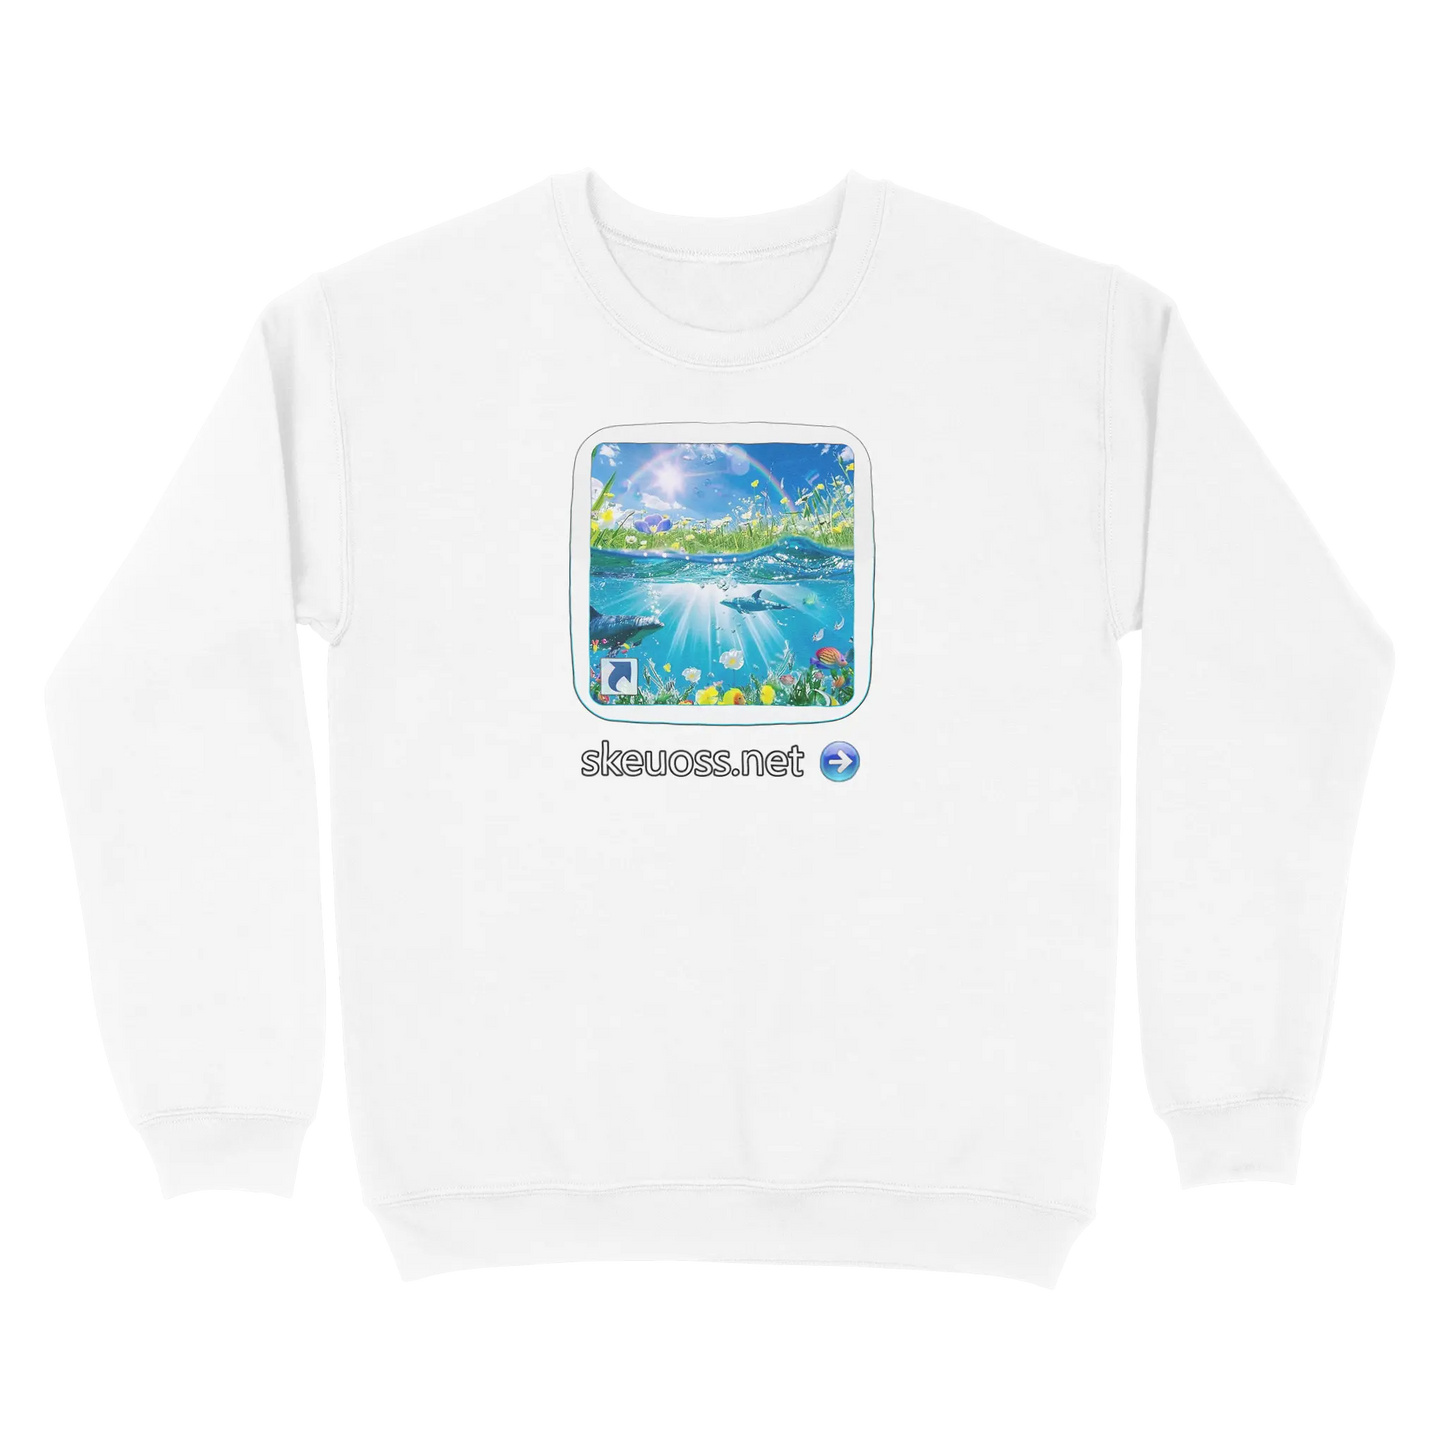 Frutiger Aero Sweatshirt - User Login Collection - User 199